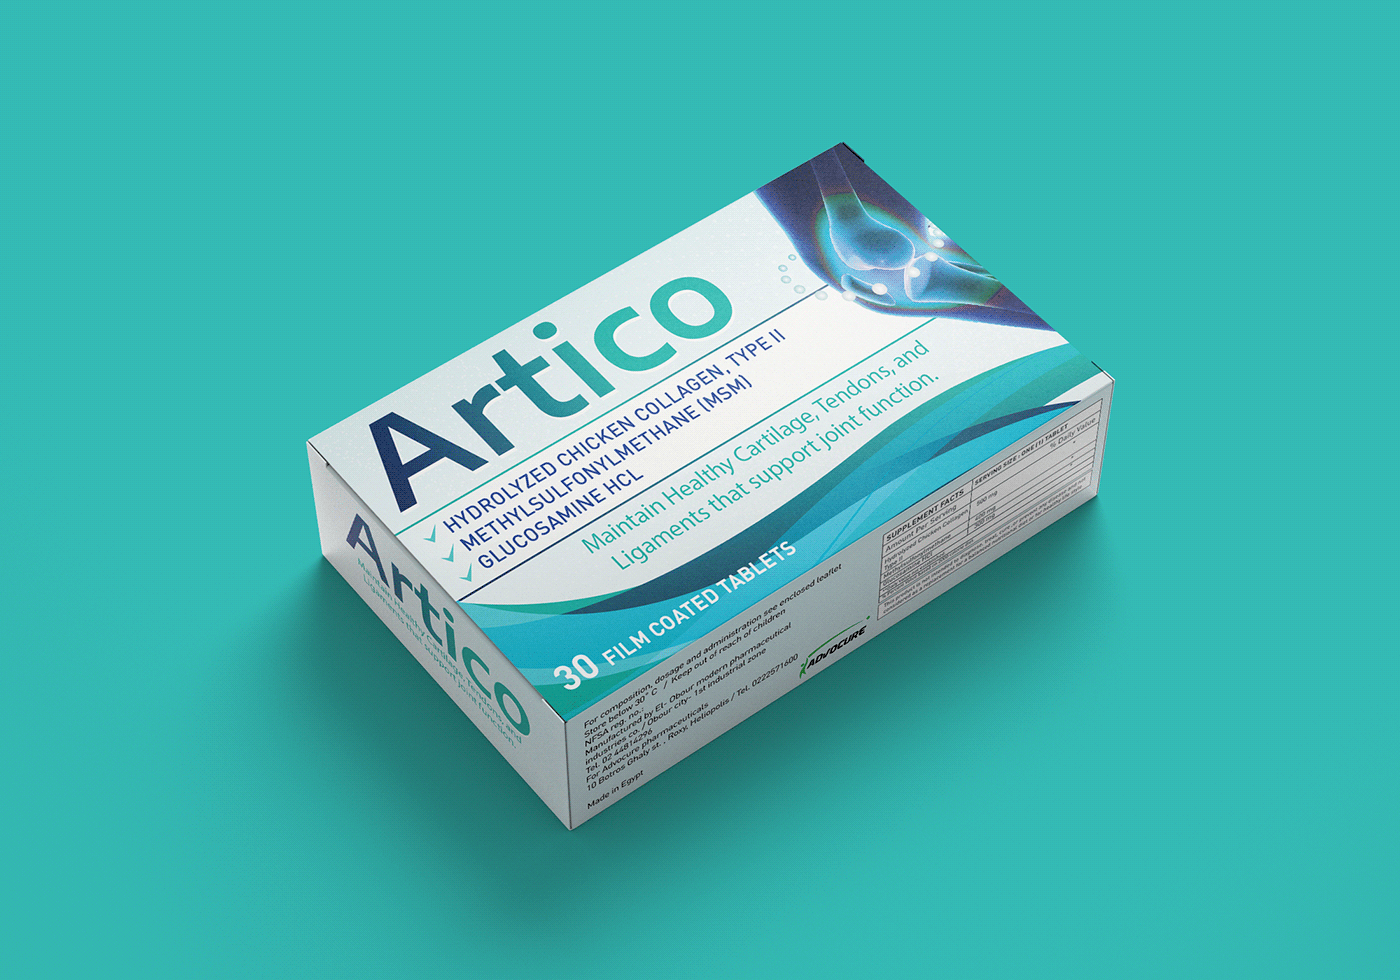 artico joints health care medical design medicine medicine packaging design Pharmaceutical pharmaceutical packaging supplement packaging 